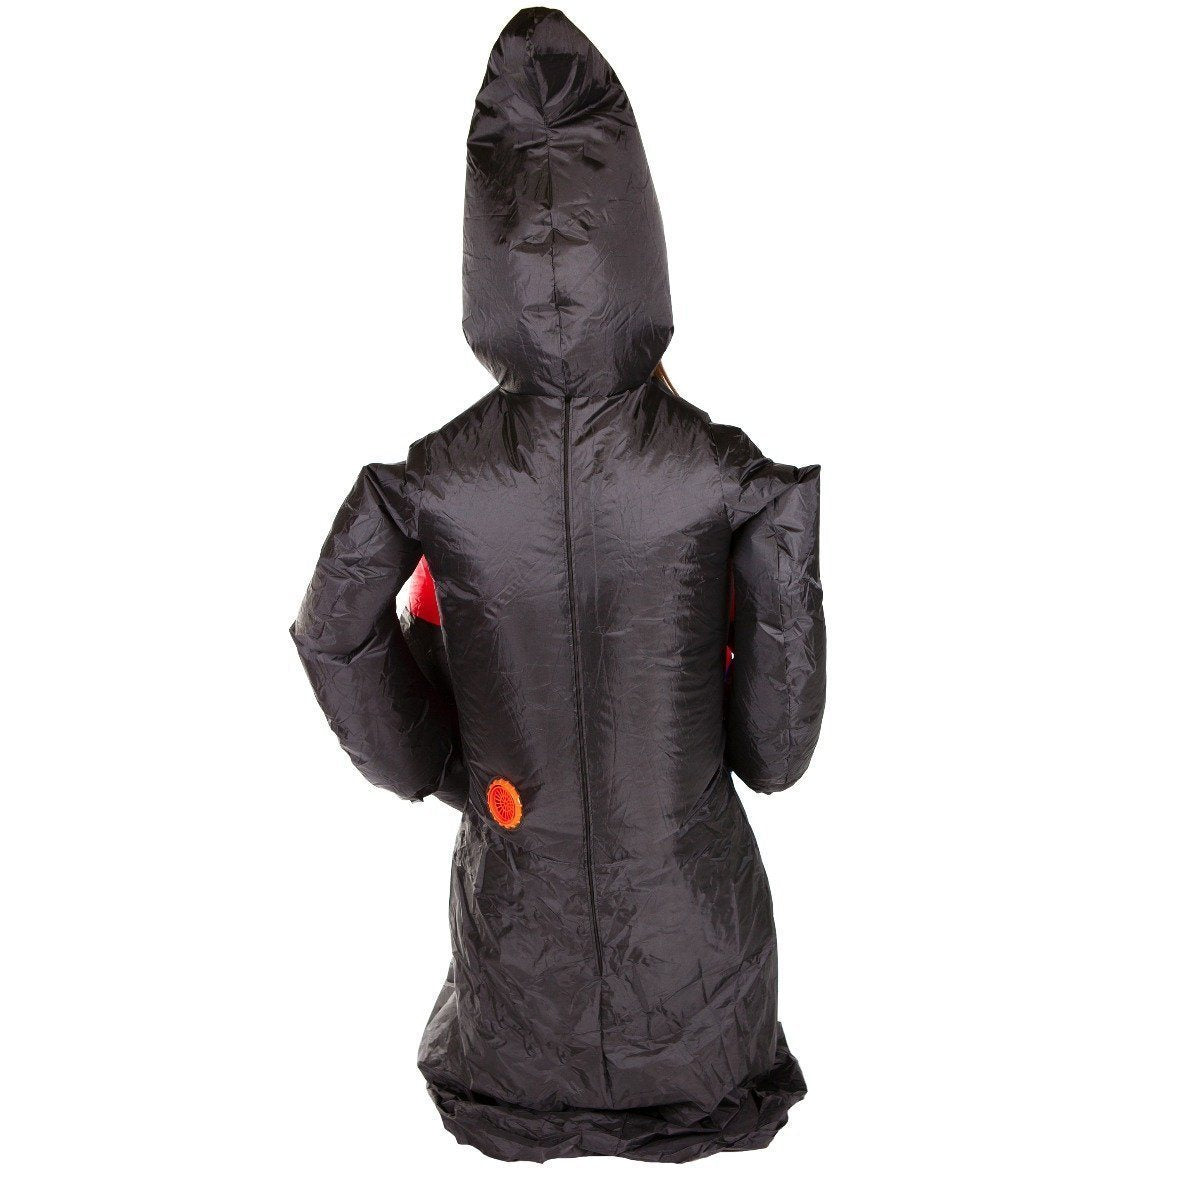 Fancy Dress - Inflatable Grim Reaper Costume